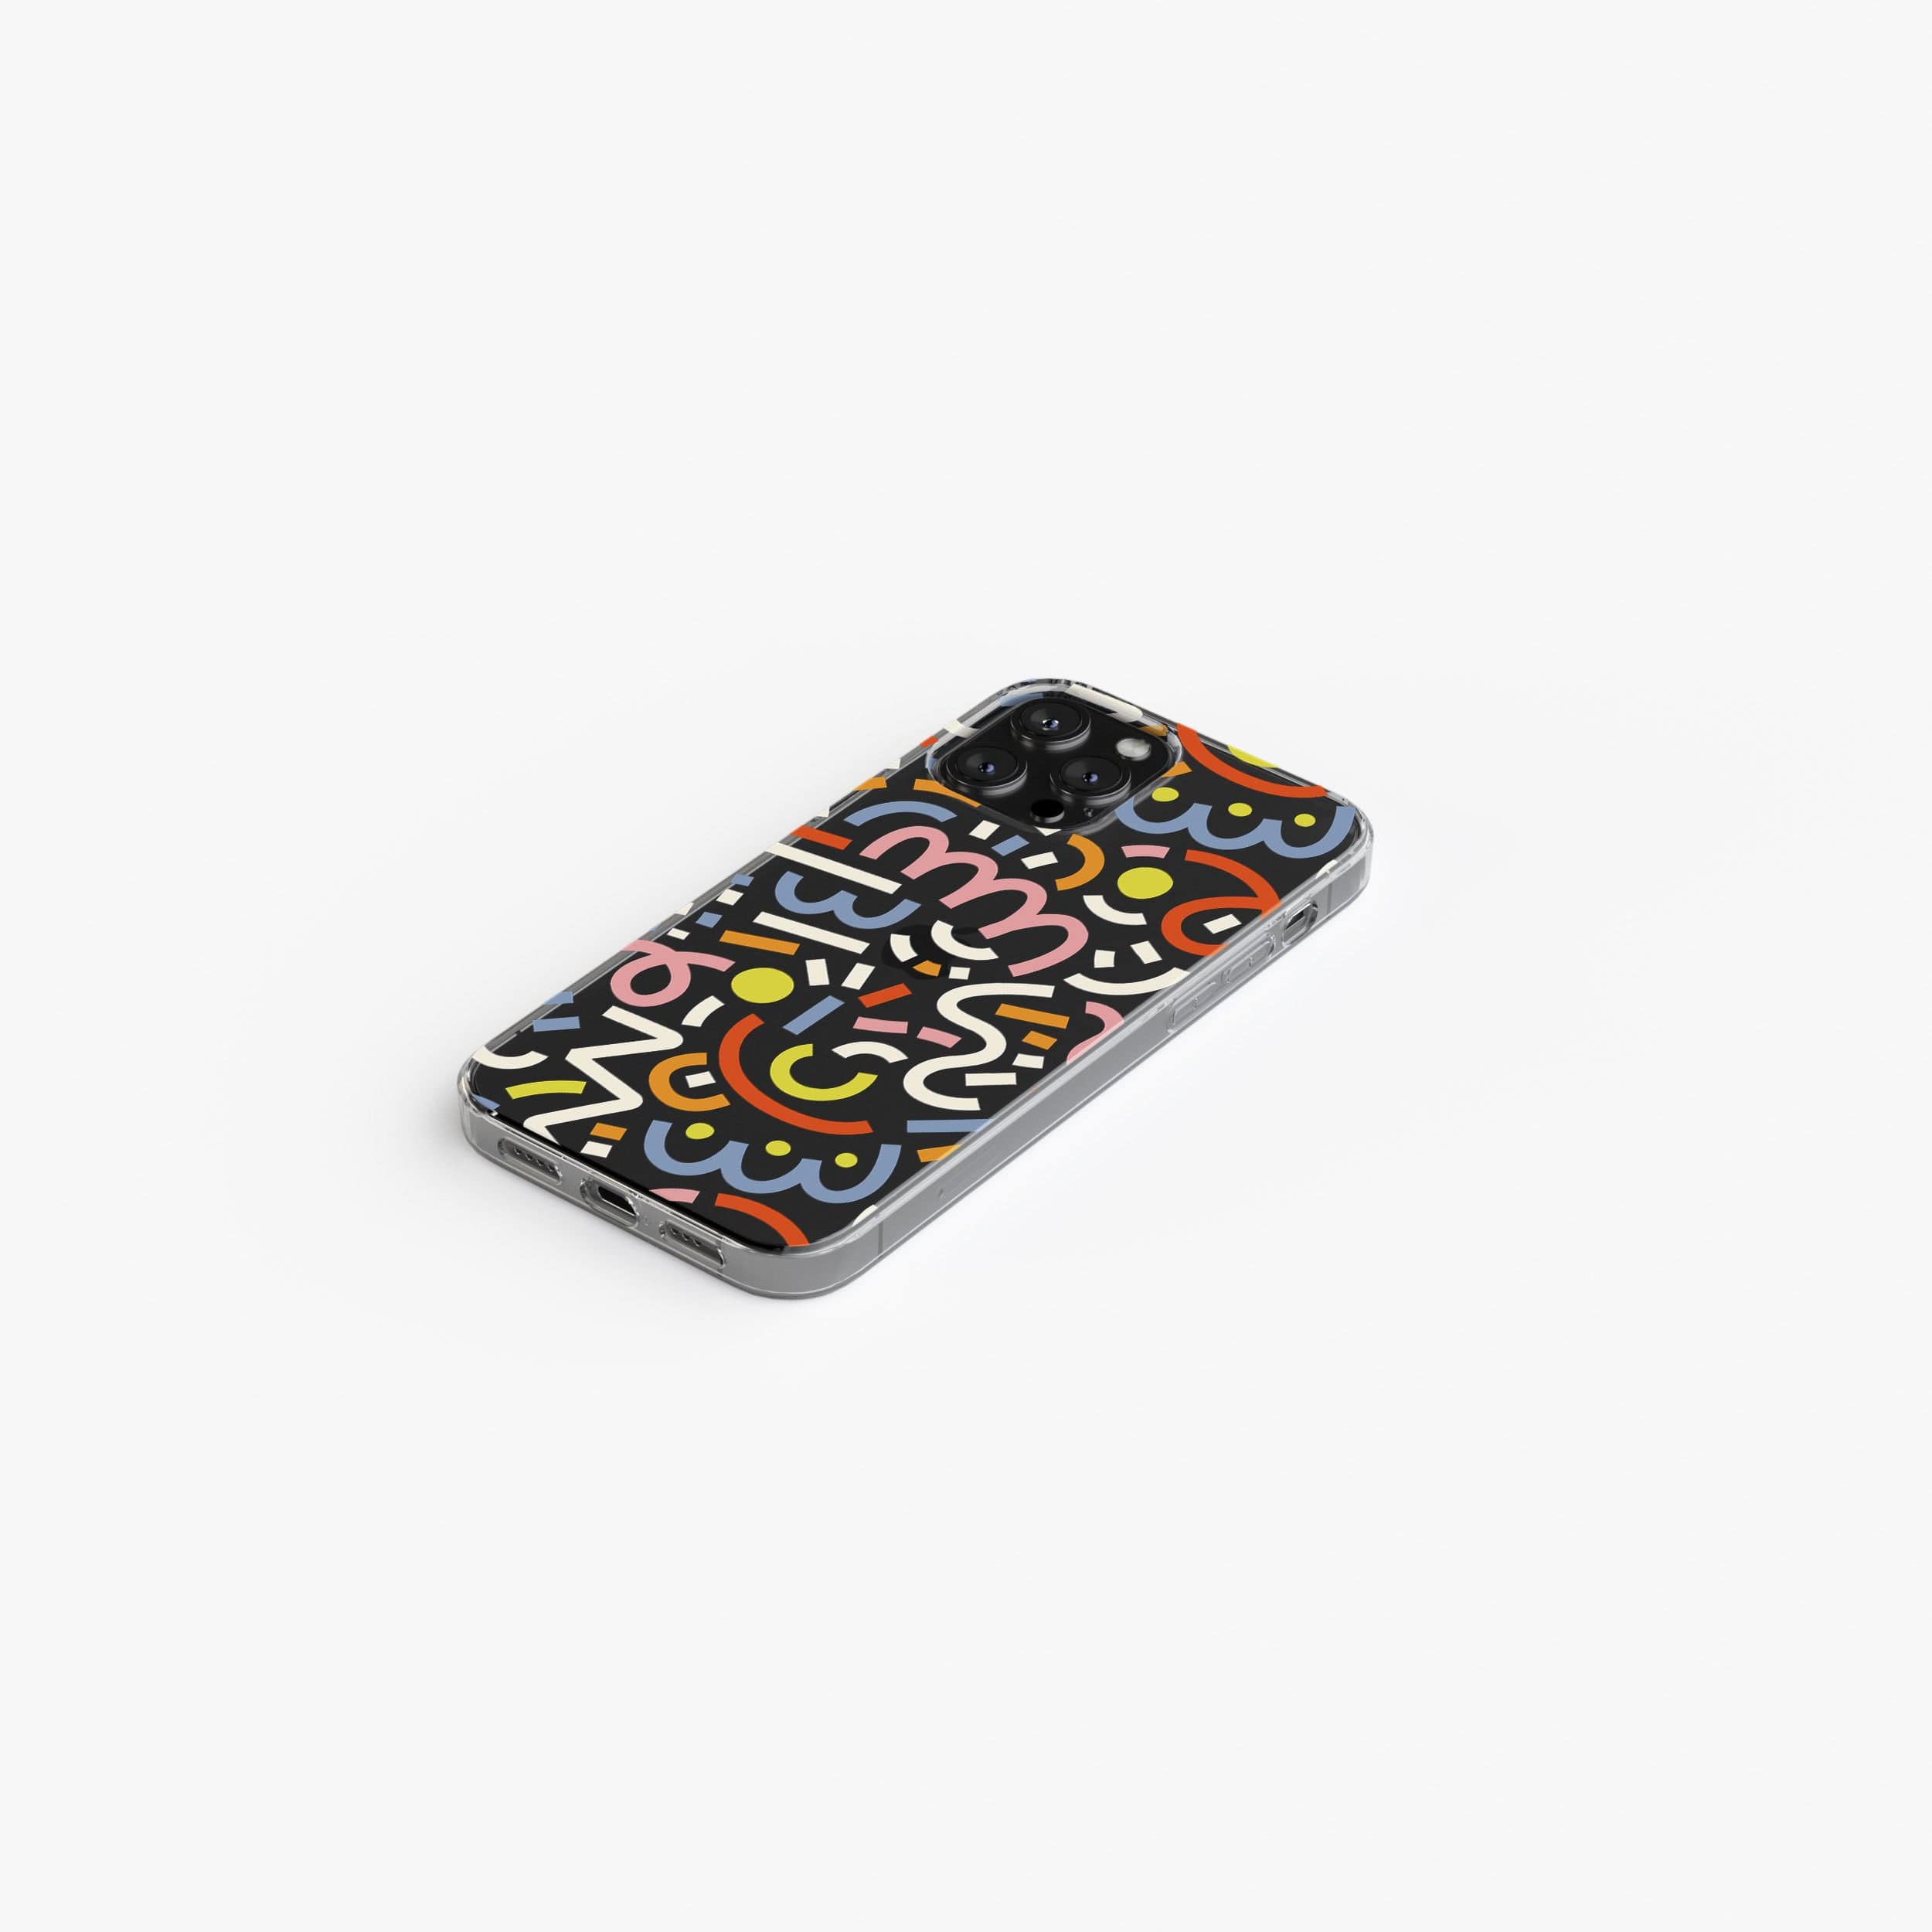 Transparent silicone case "Multicolored patterns"